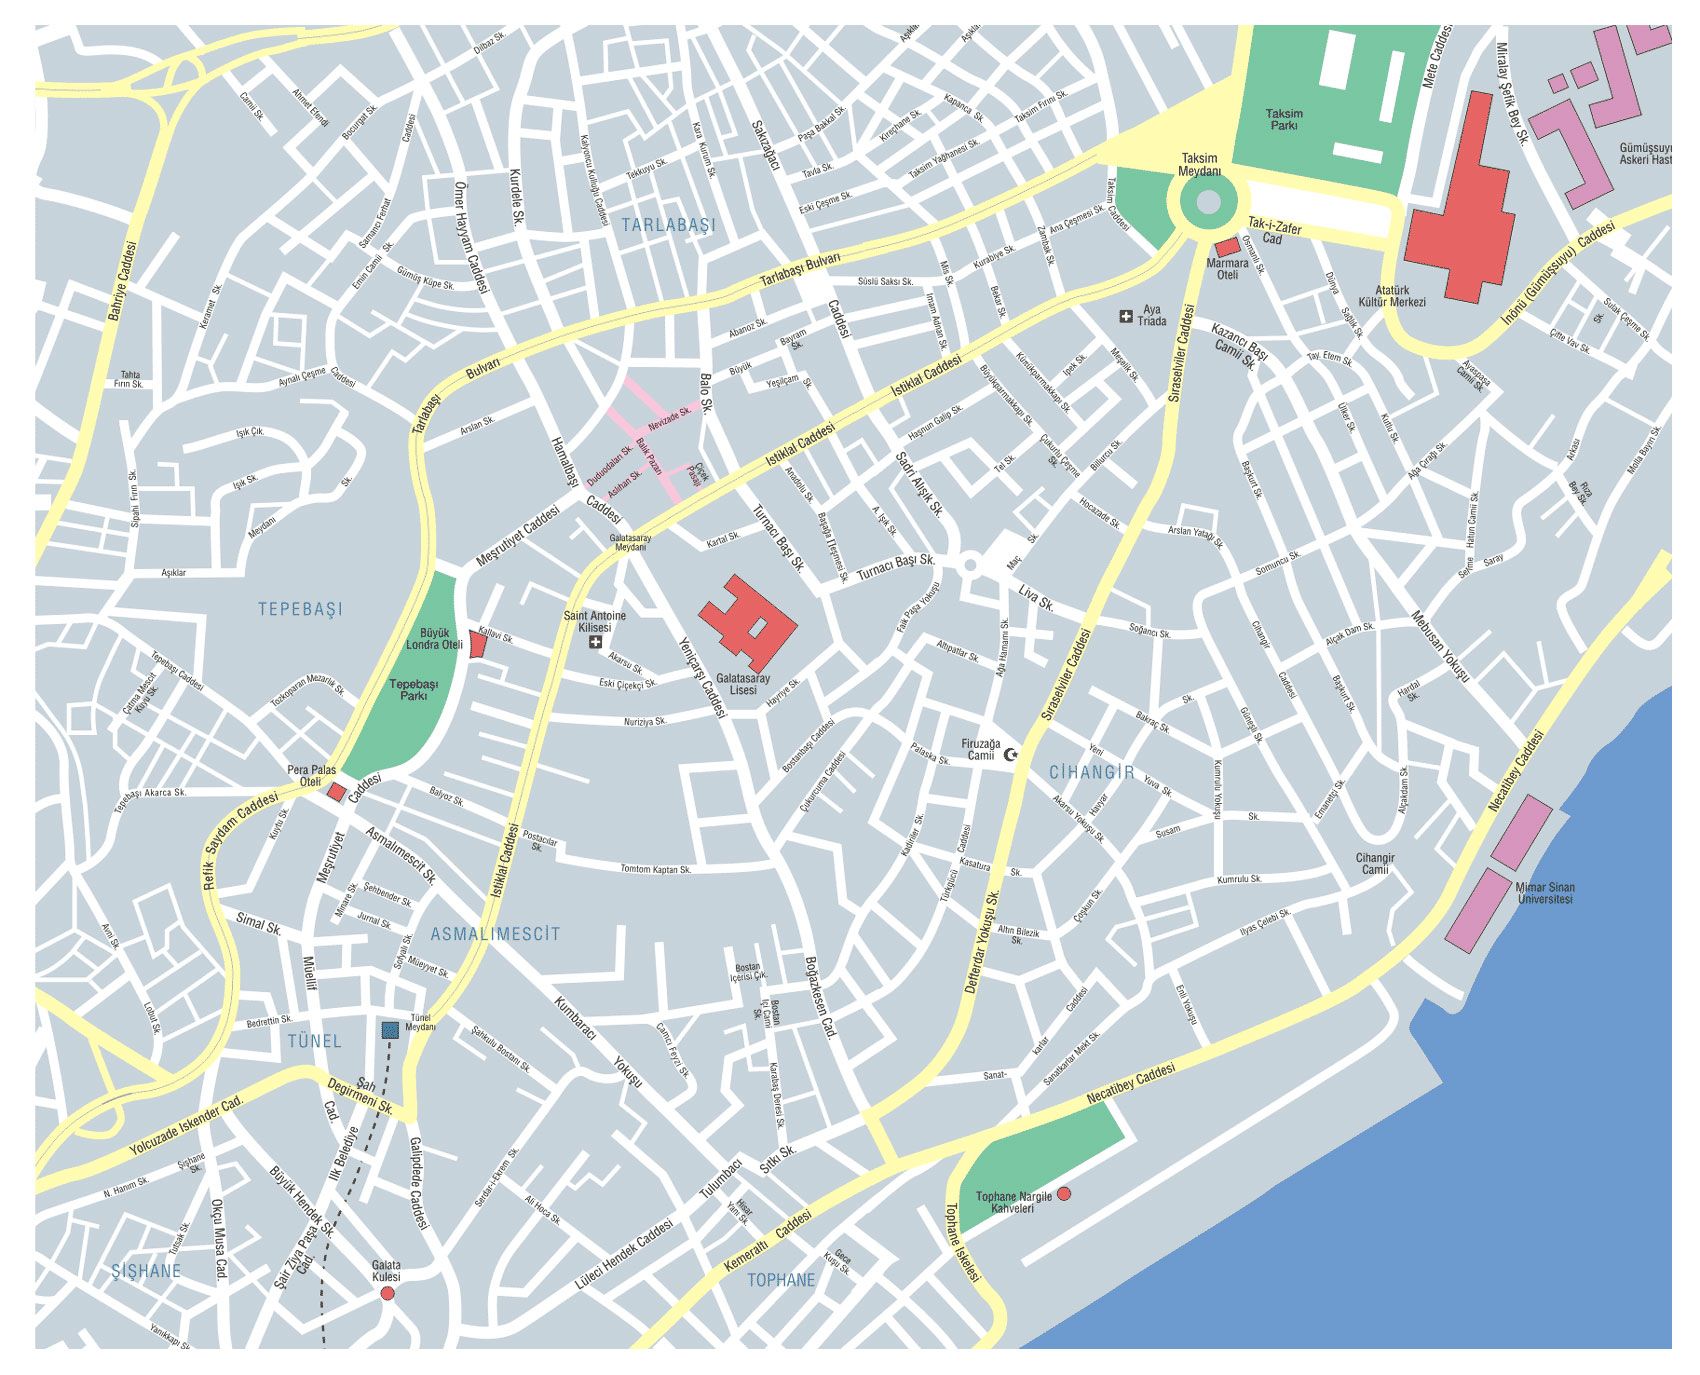 Таксимо район стамбула. Площадь Таксим в Стамбуле на карте. Район Таксим в Стамбуле на карте. Районы Стамбула на карте и площадь Таксим. Улица Таксим в Стамбуле на карте.